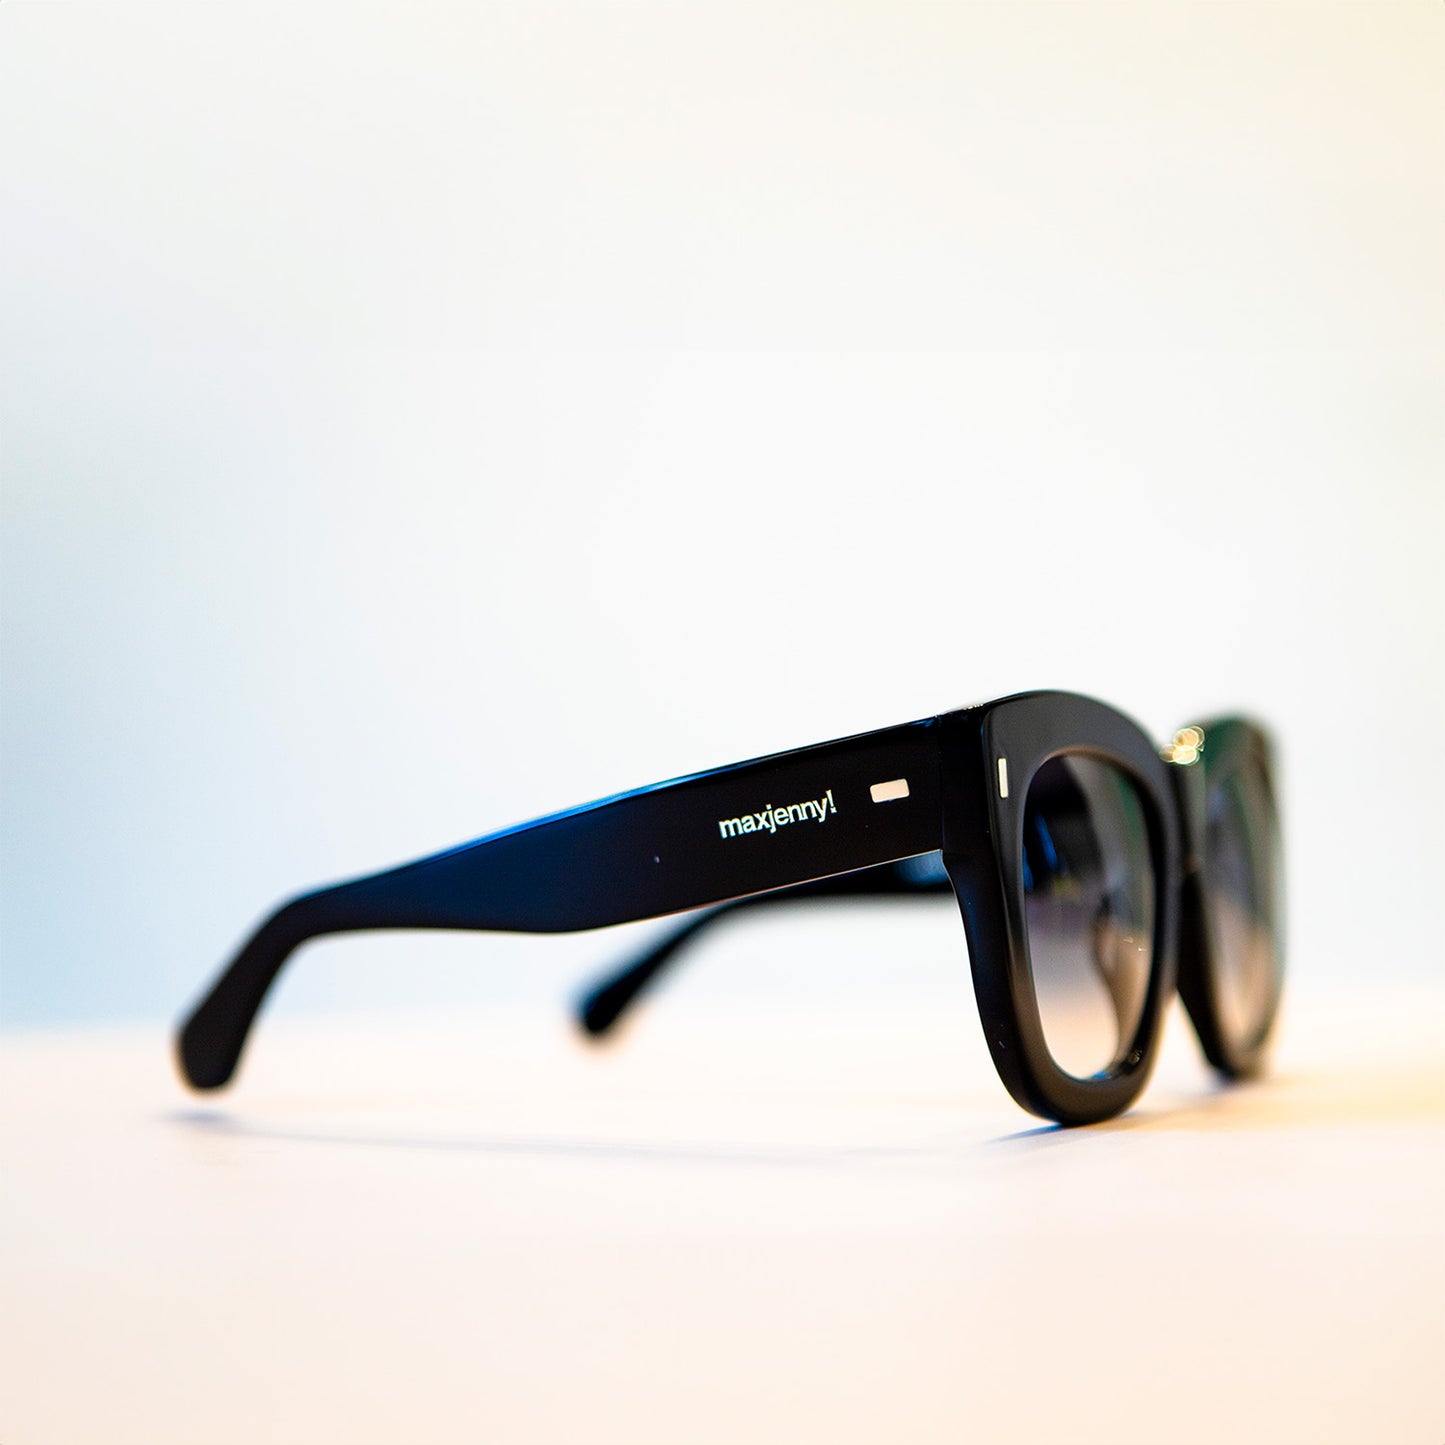 maxjenny! plant-based glasses for sun & optic Black